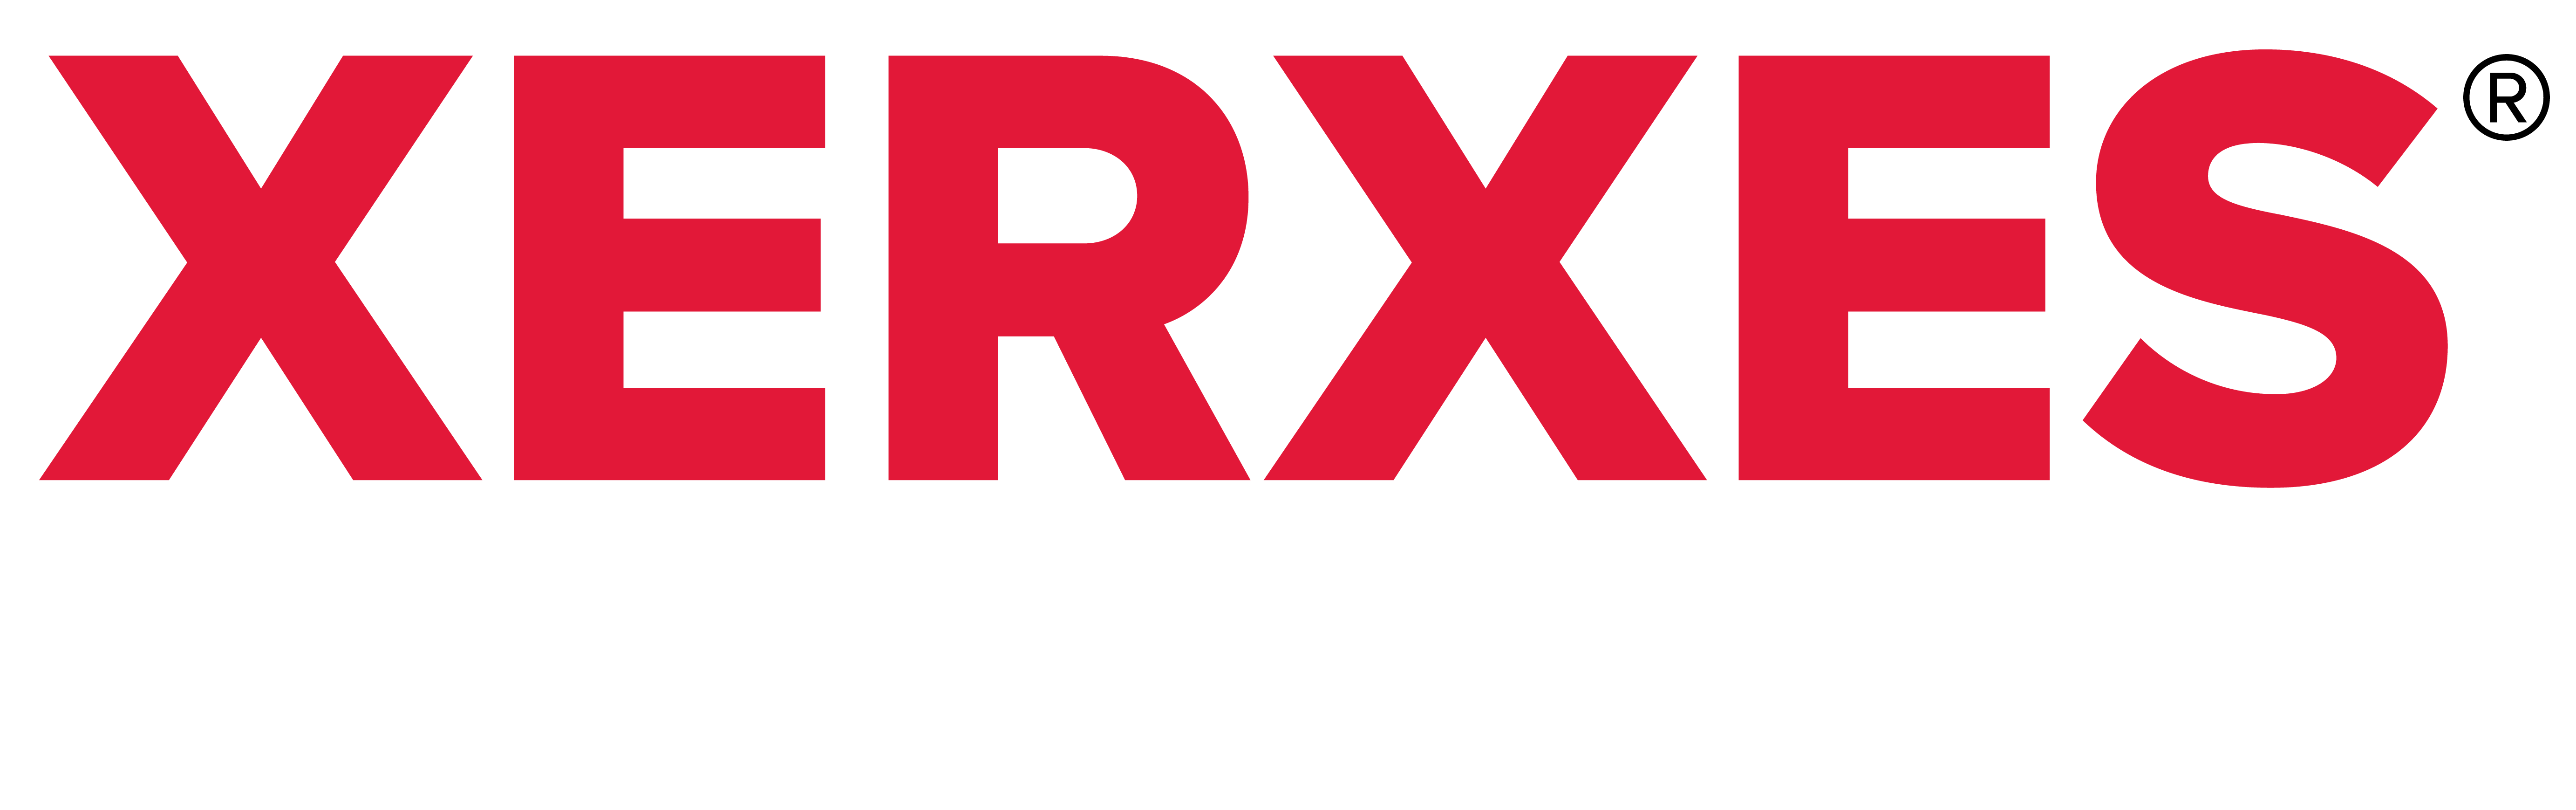 Xerxes-Logo-PMS186-Red_1_011421.png